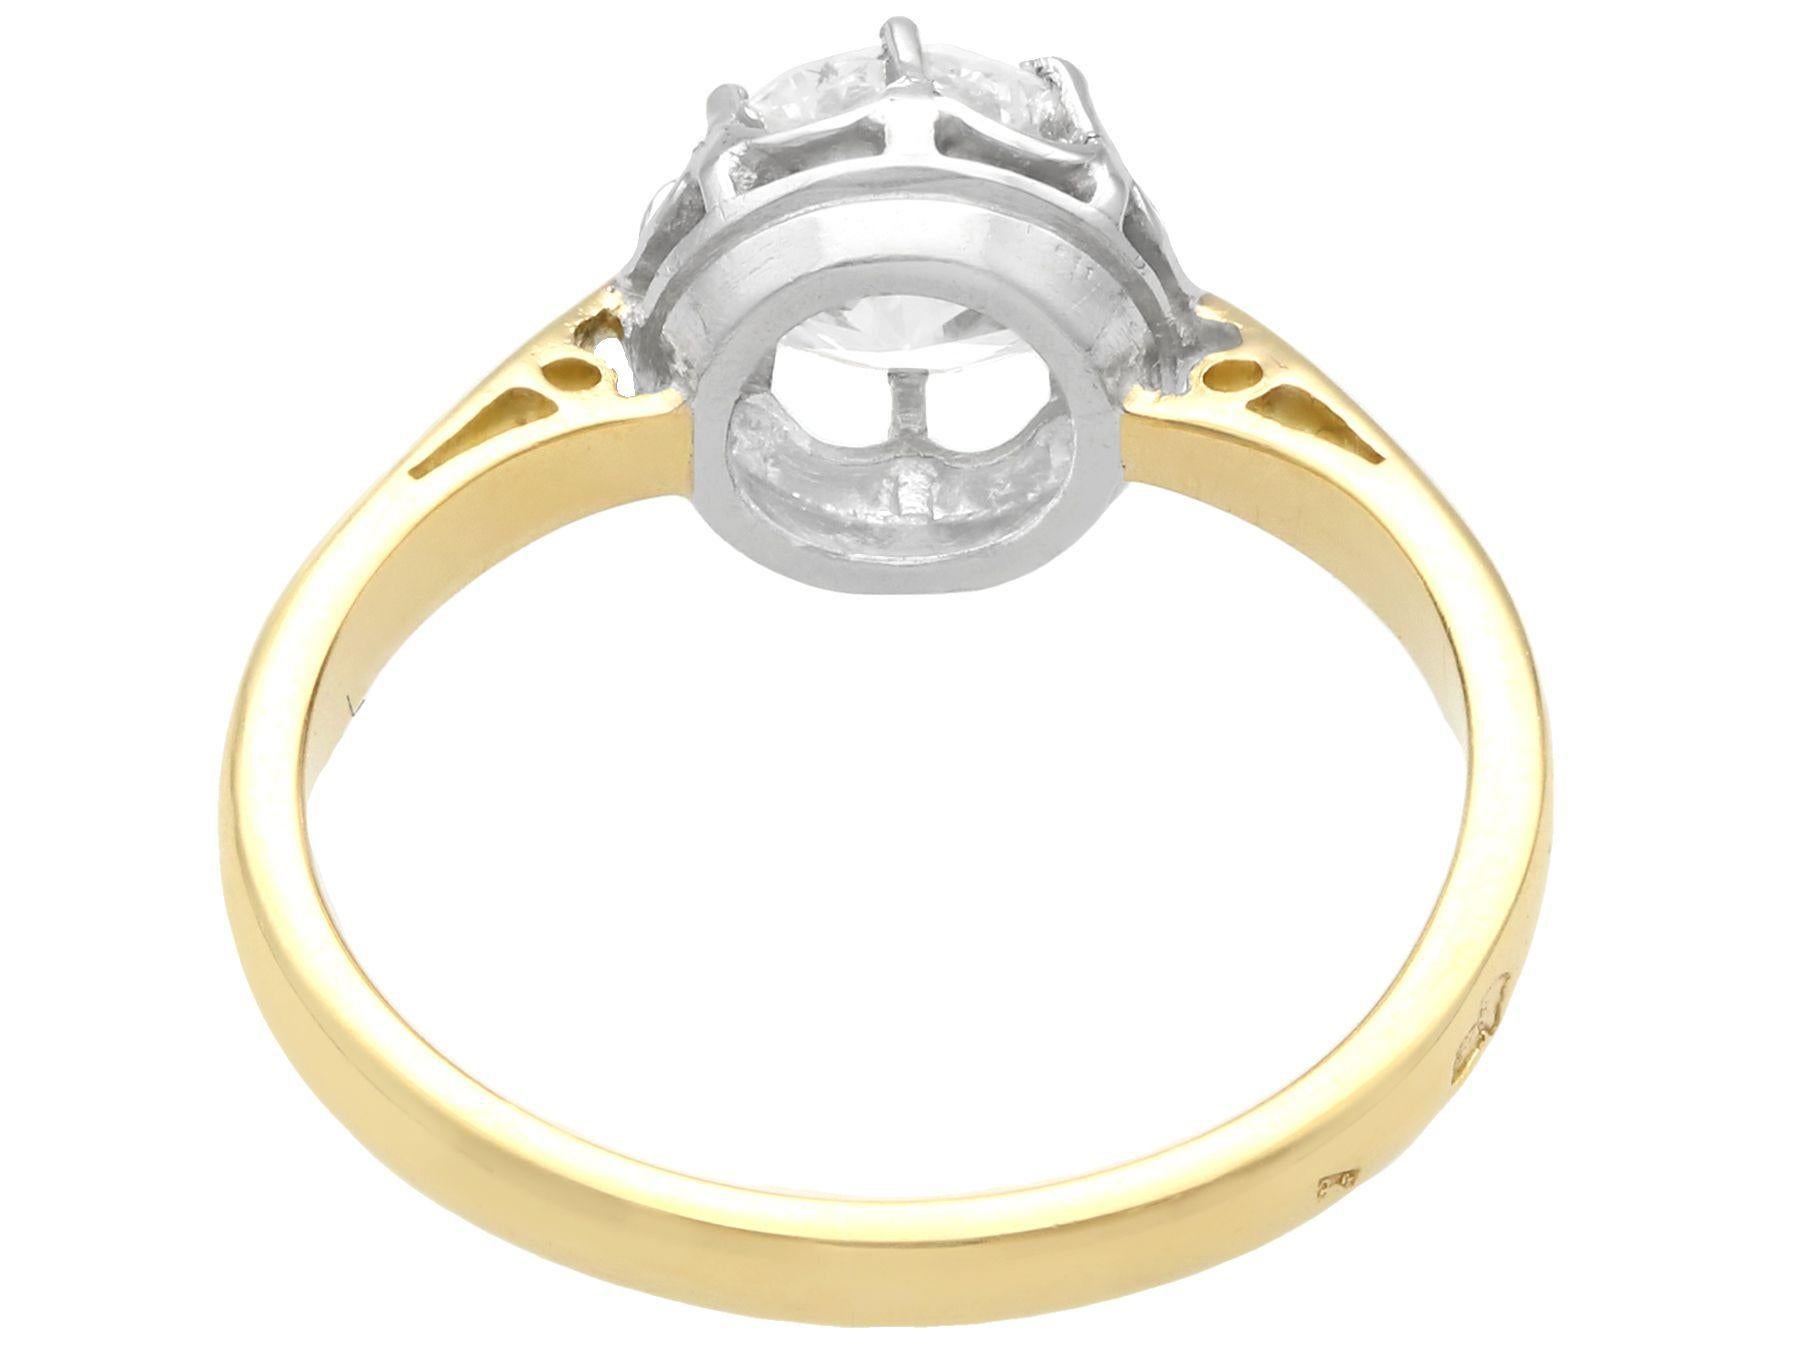 0.2 carat diamond ring